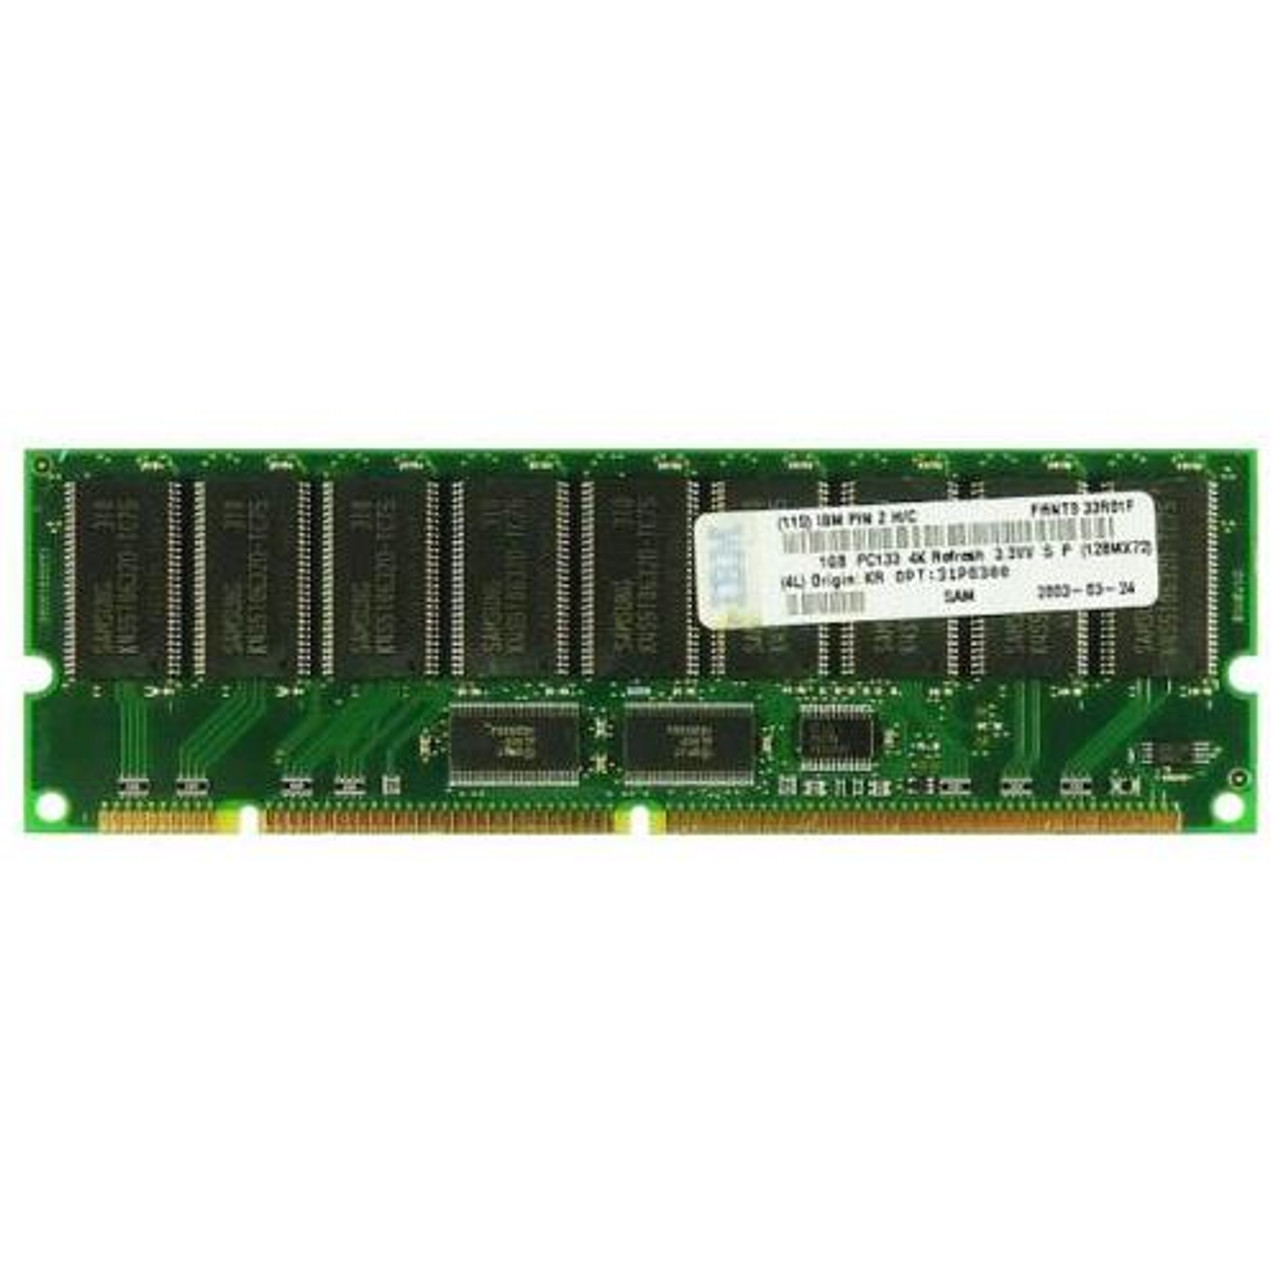 31P8300 IBM 1GB SDRAM Registered ECC PC-133 133Mhz Server